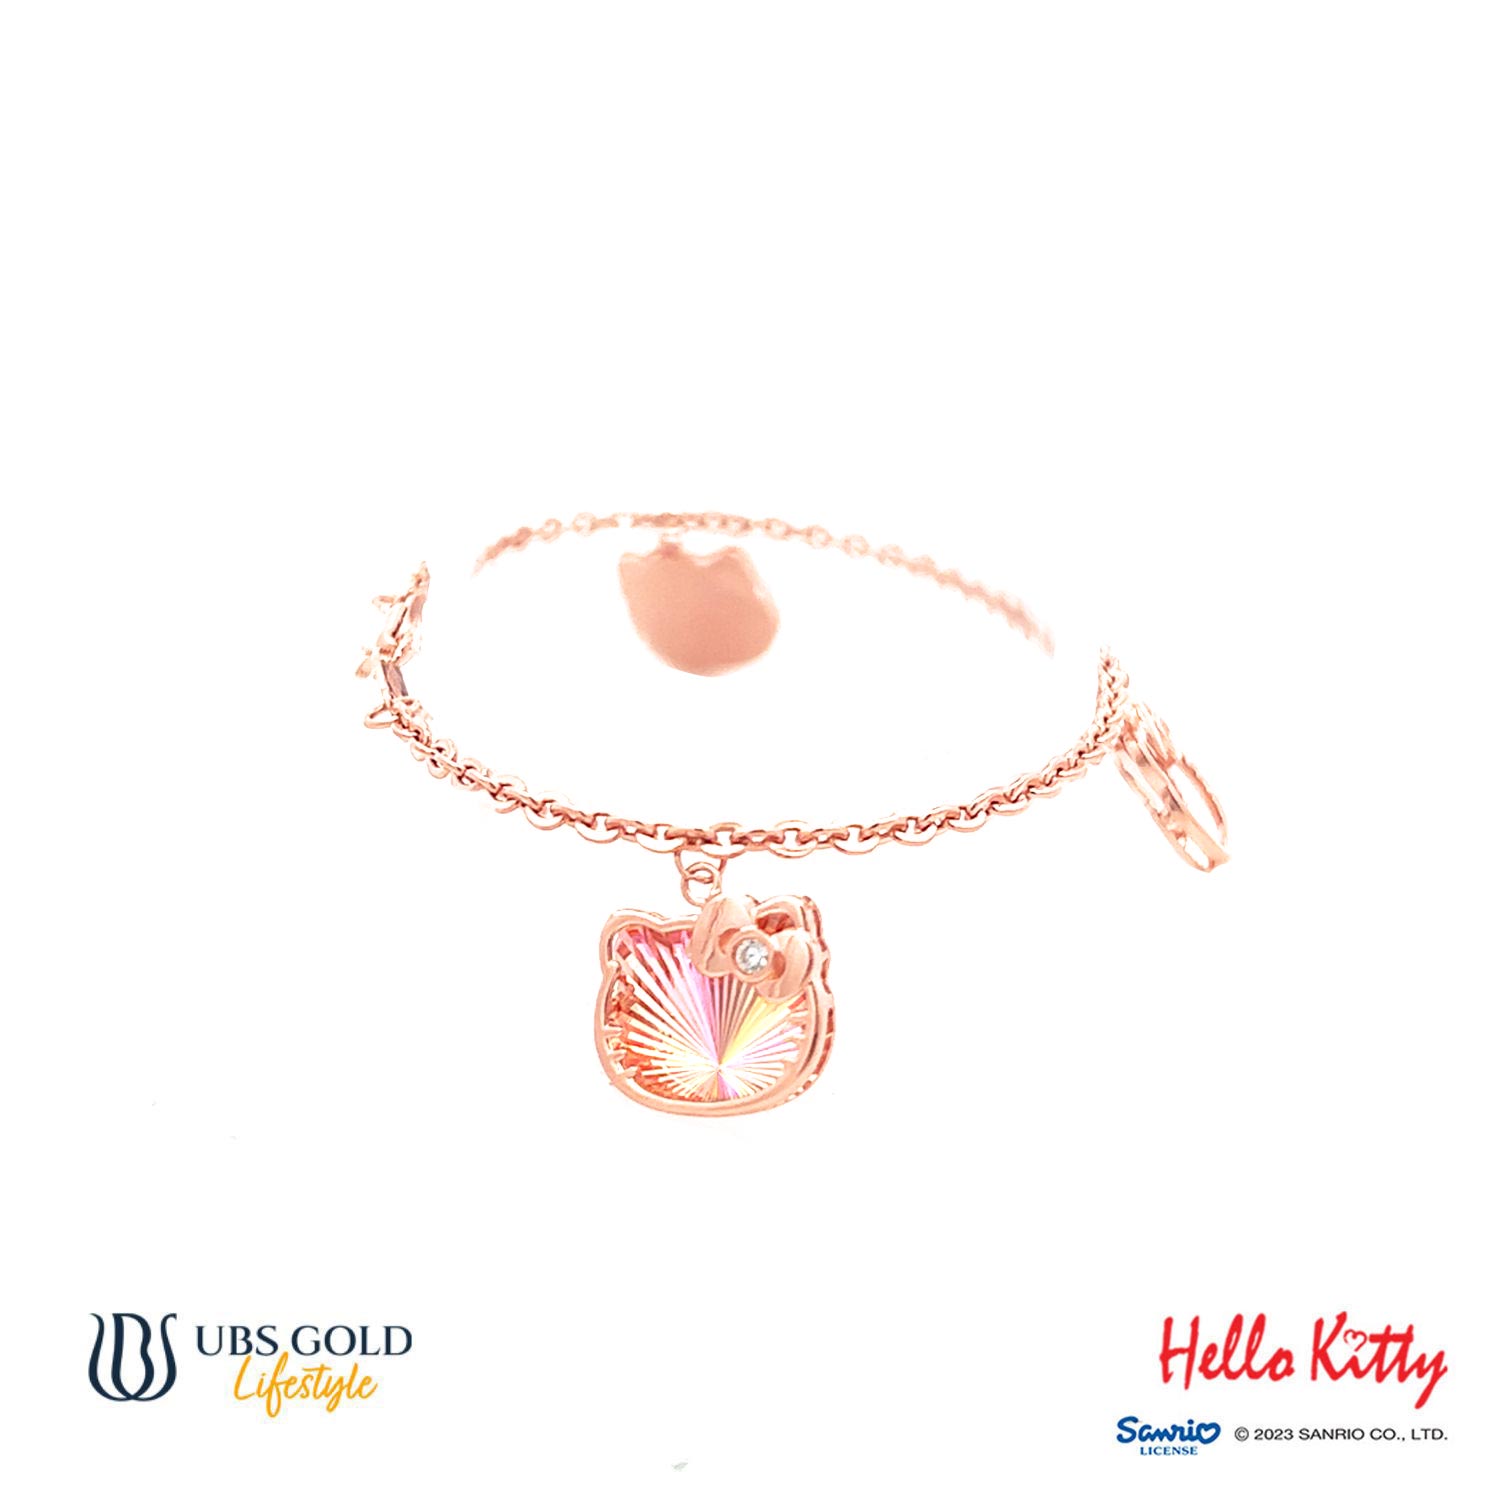 UBS Gold Gelang Emas Sanrio Hello Kitty Rainbow - Hgz0072 - 17K